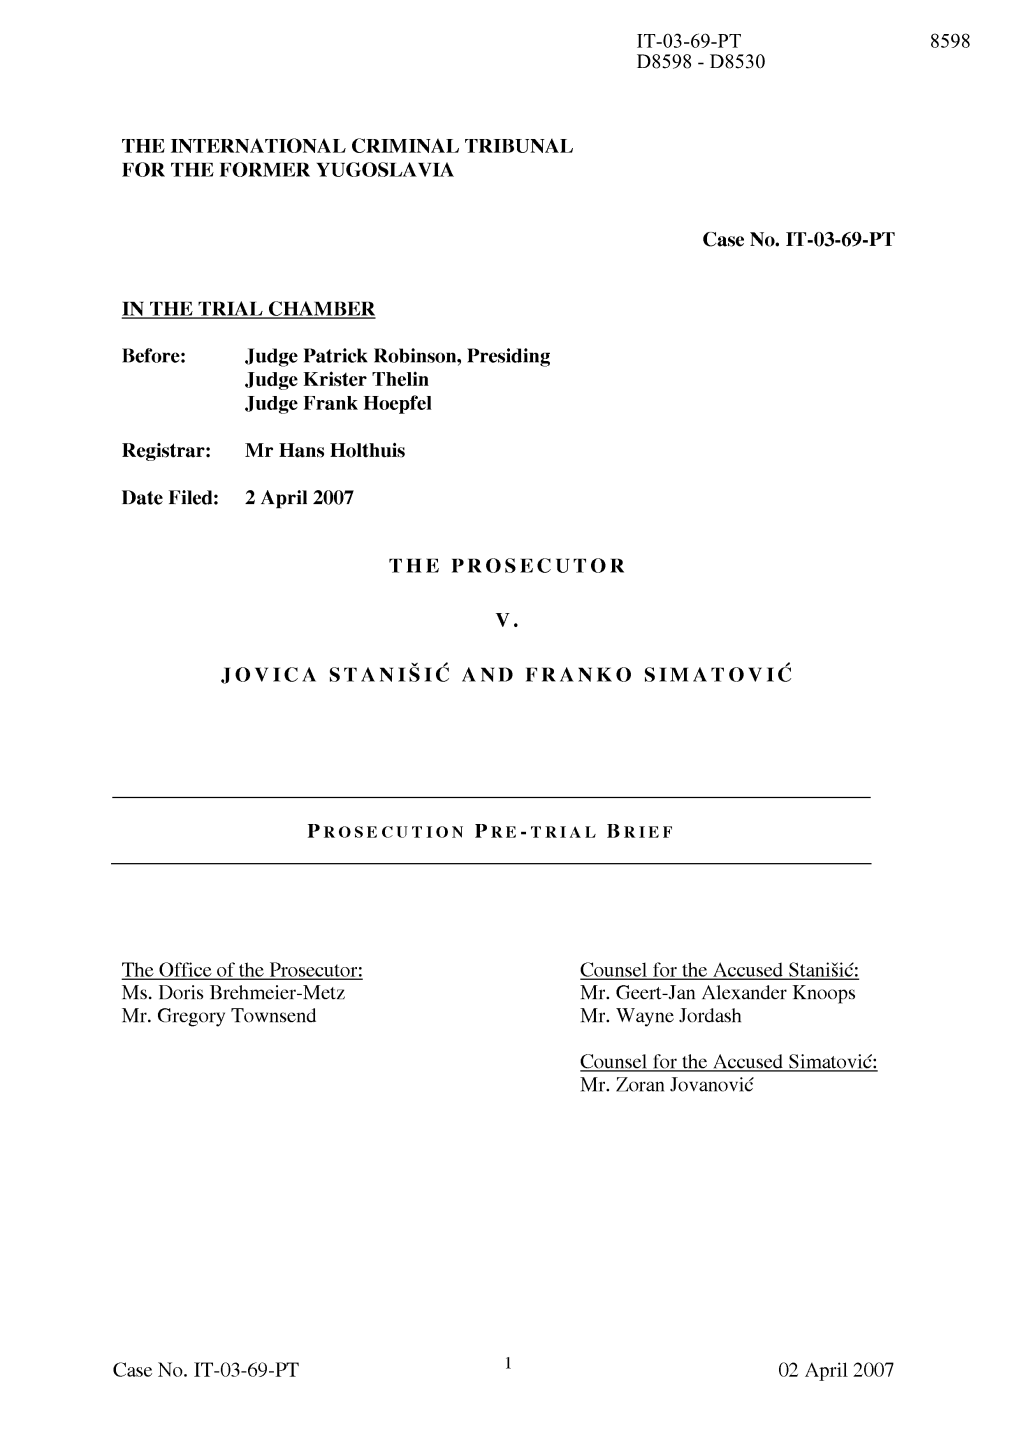 Prosecution Pre-Trial Brief